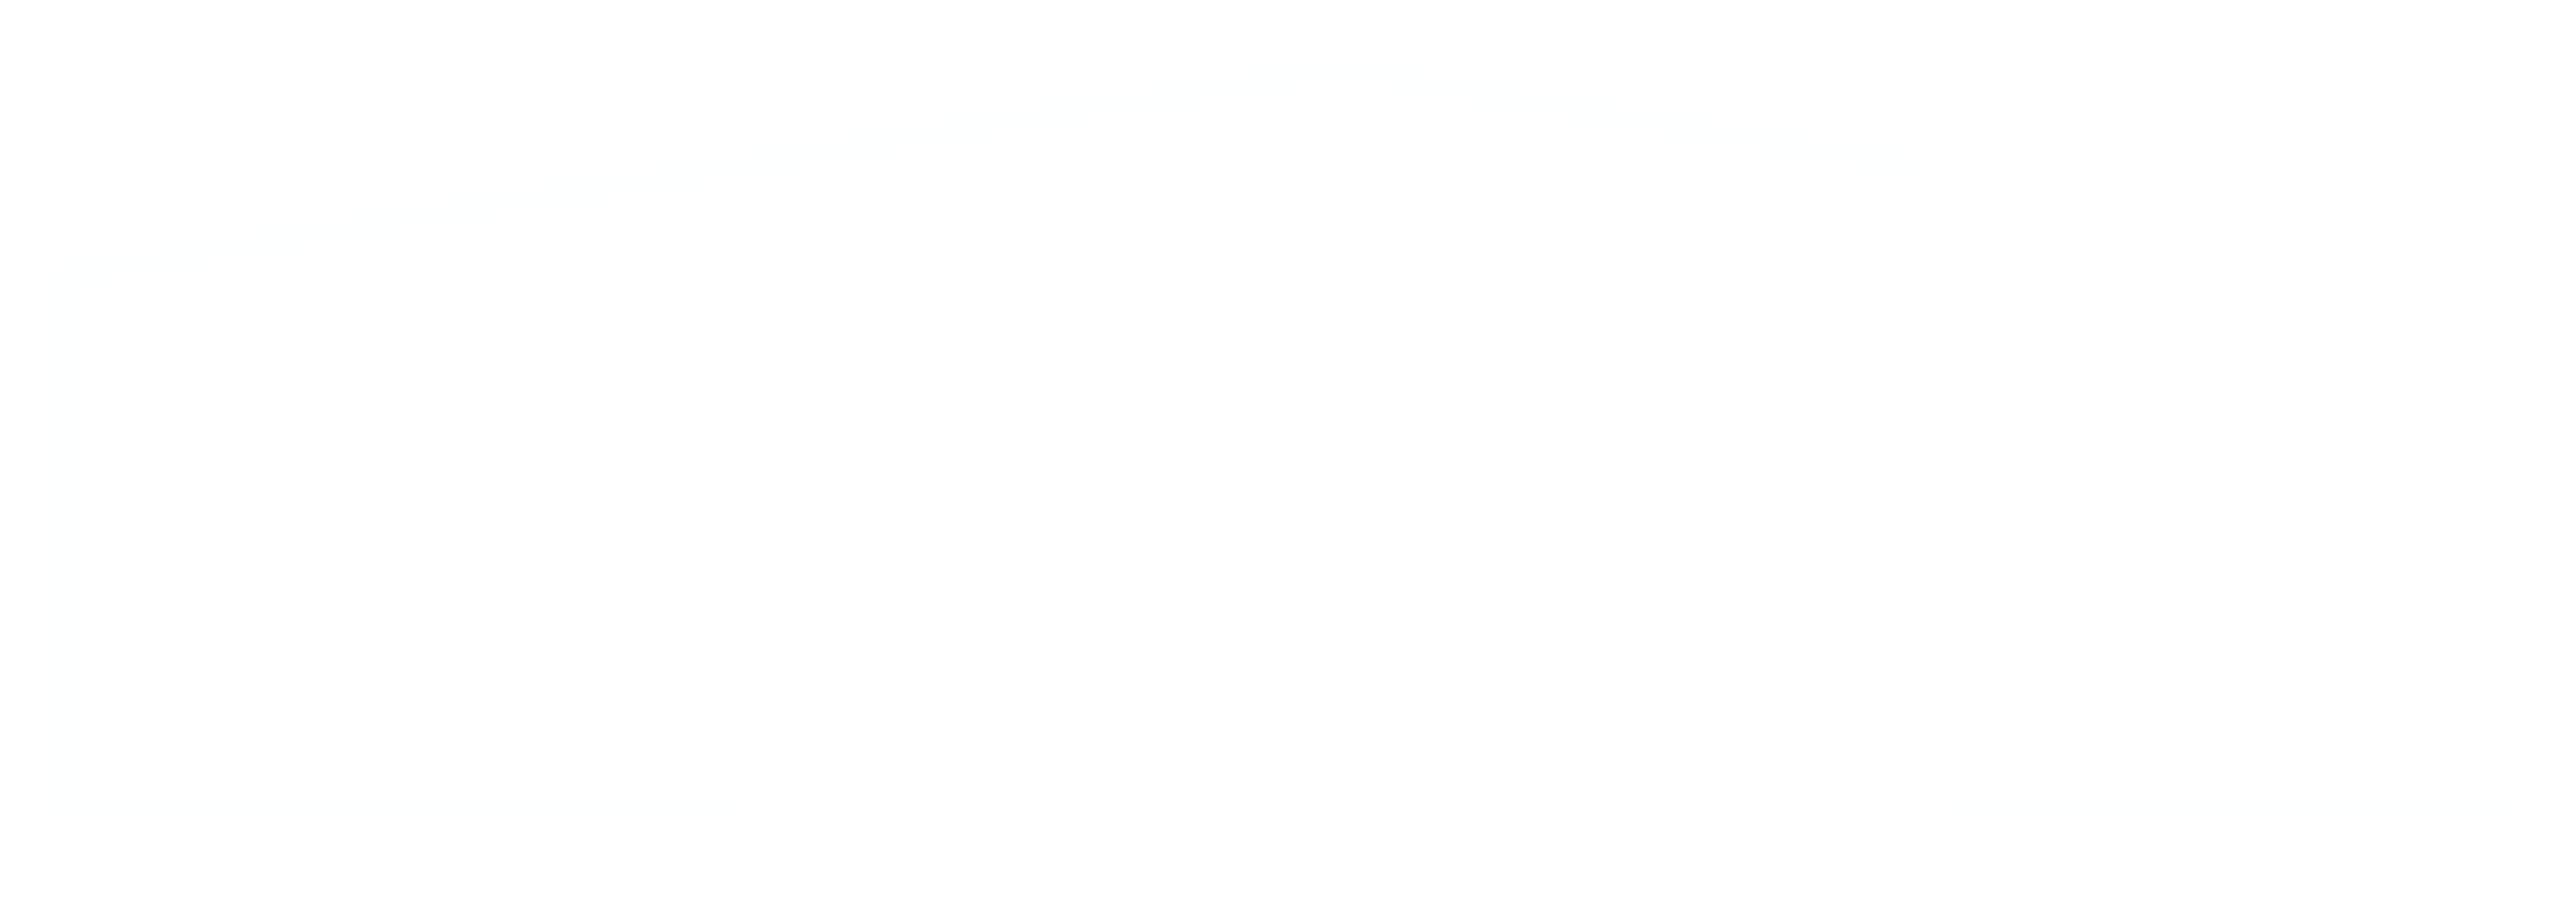 Dr. Fuchs Immobilien & Hoff Immobilienbetreuungs GmbH Logo weißDr. Fuchs Immobilien & Hoff Immobilienbetreuungs GmbH